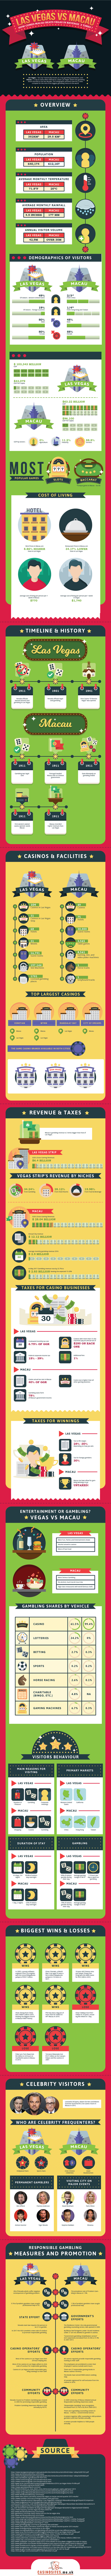 infographic comparing the gaming destinations Las Vegas, Nevada vs Macau, China